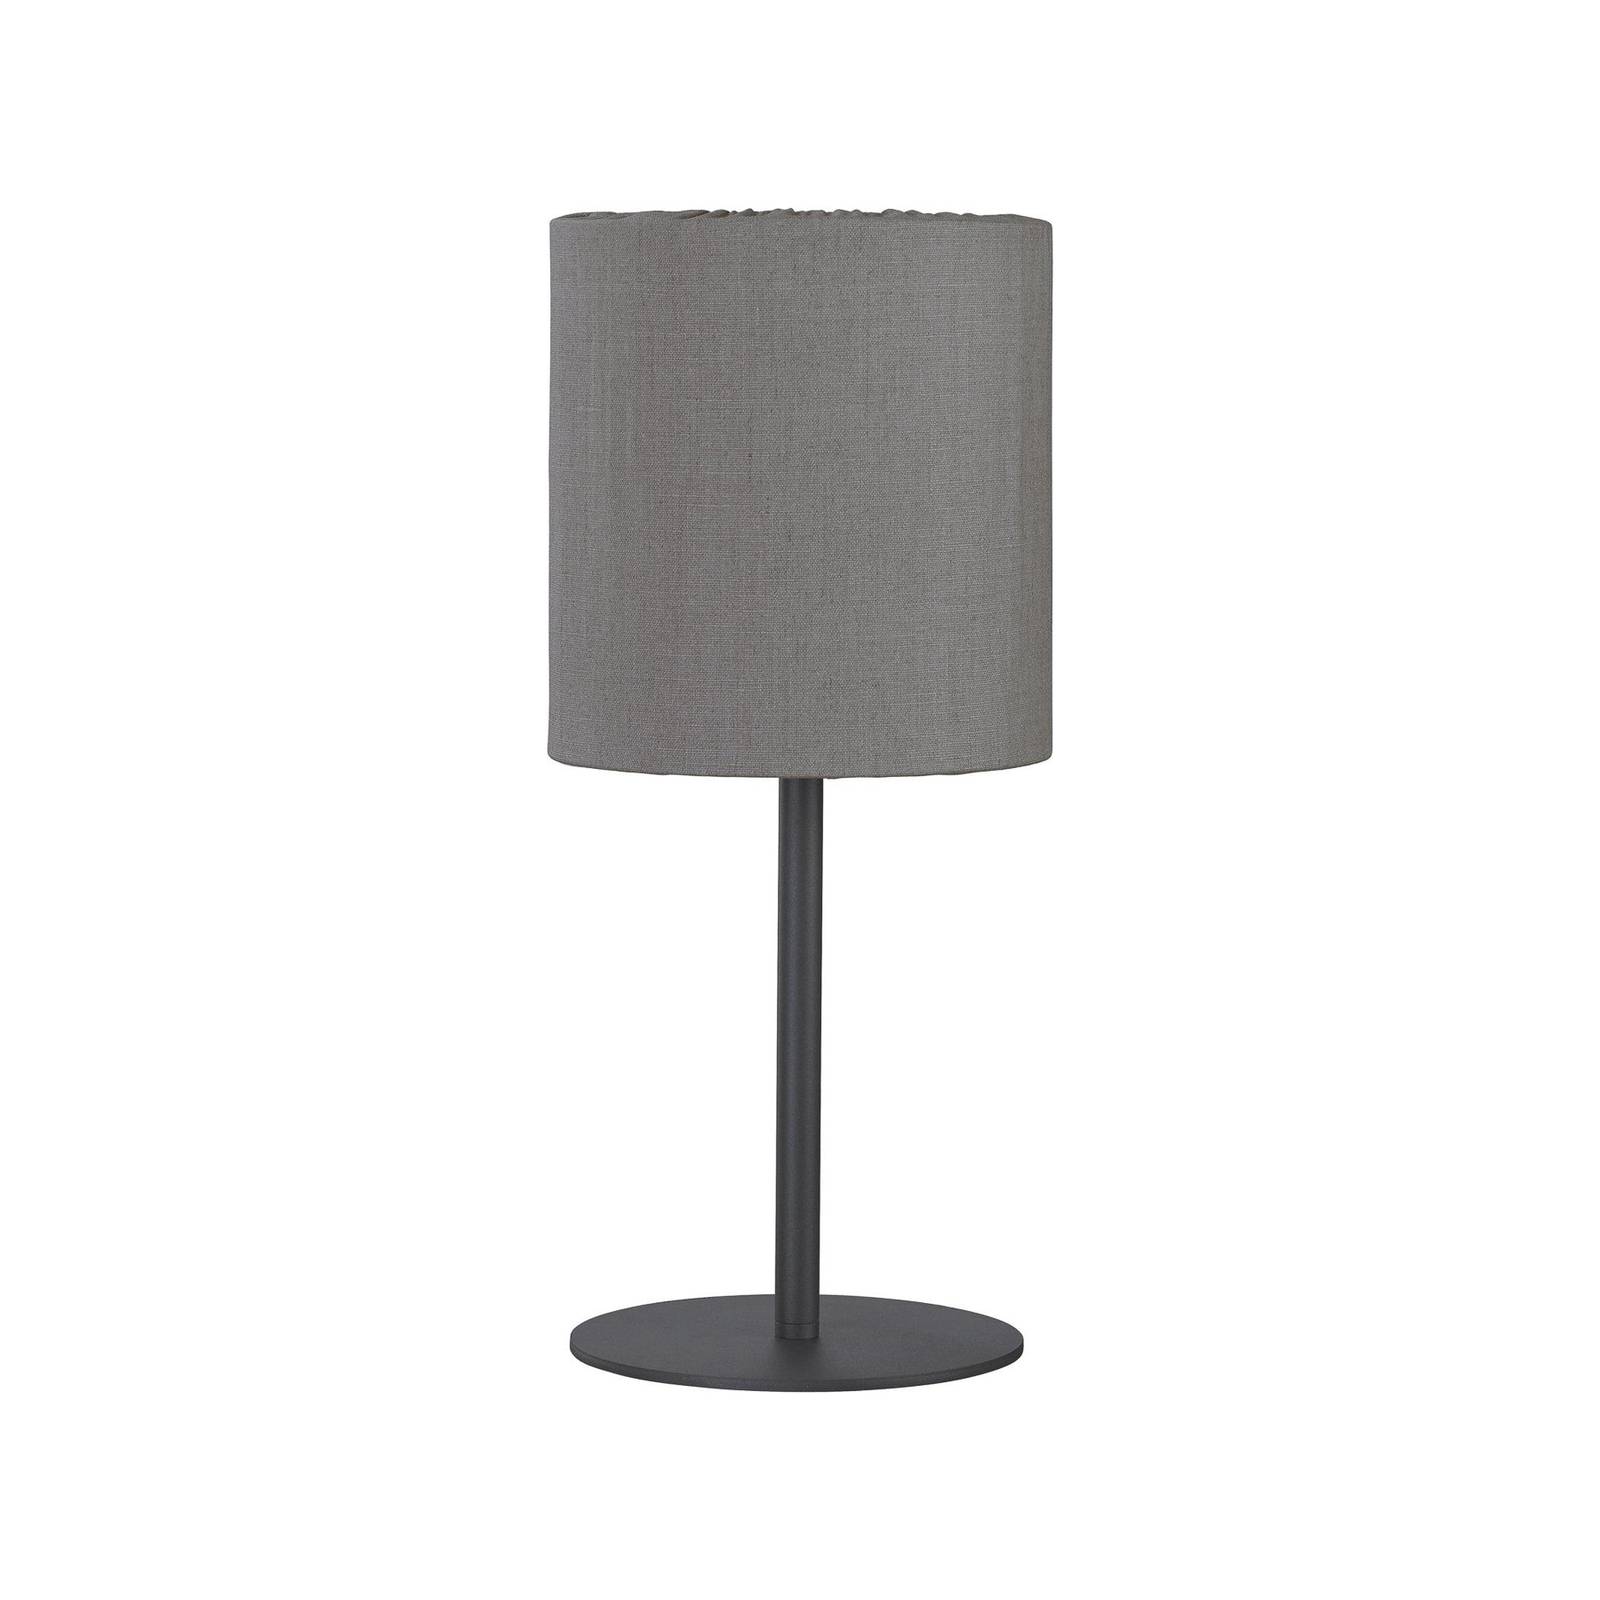 PR Home bordslampa Agnar för utomhusbruk mörkgrå/brun 57 cm